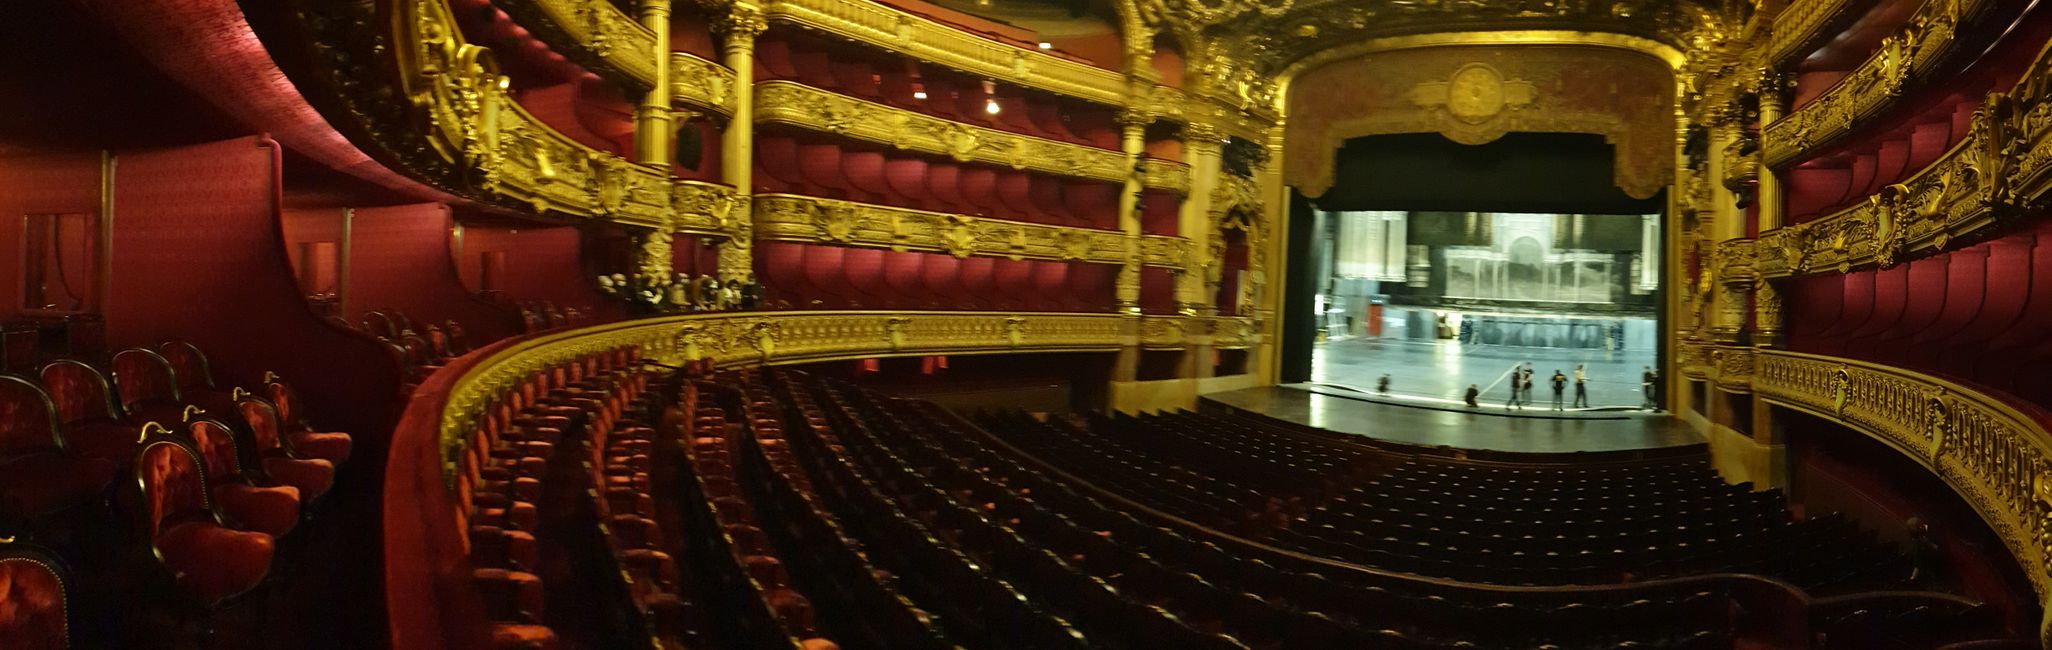 Opéra Garnier - Grand Foyer